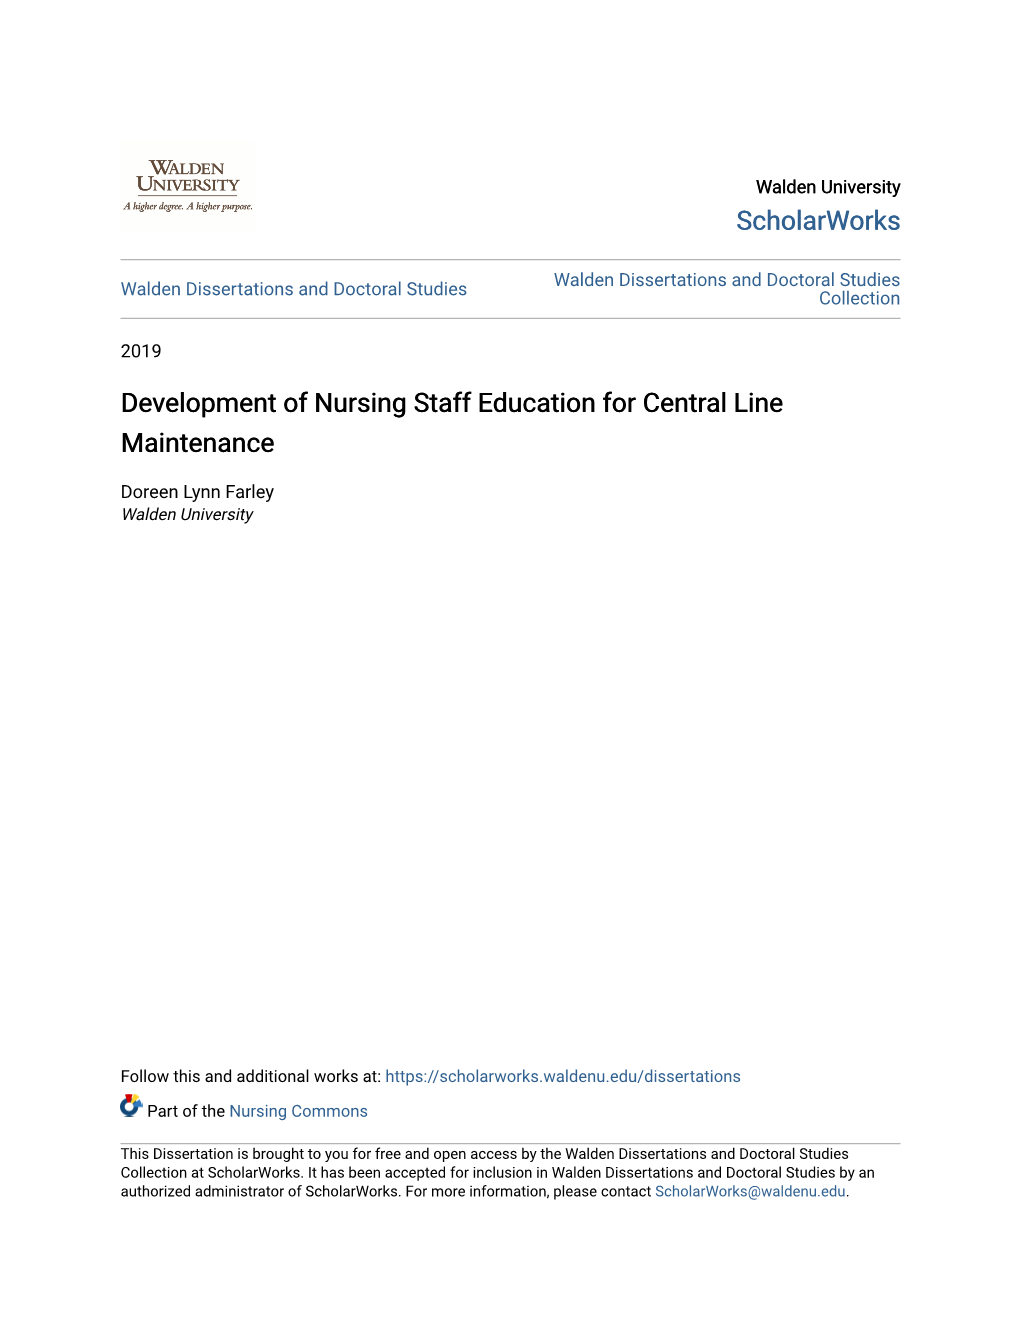 Development of Nursing Staff Education for Central Line Maintenance